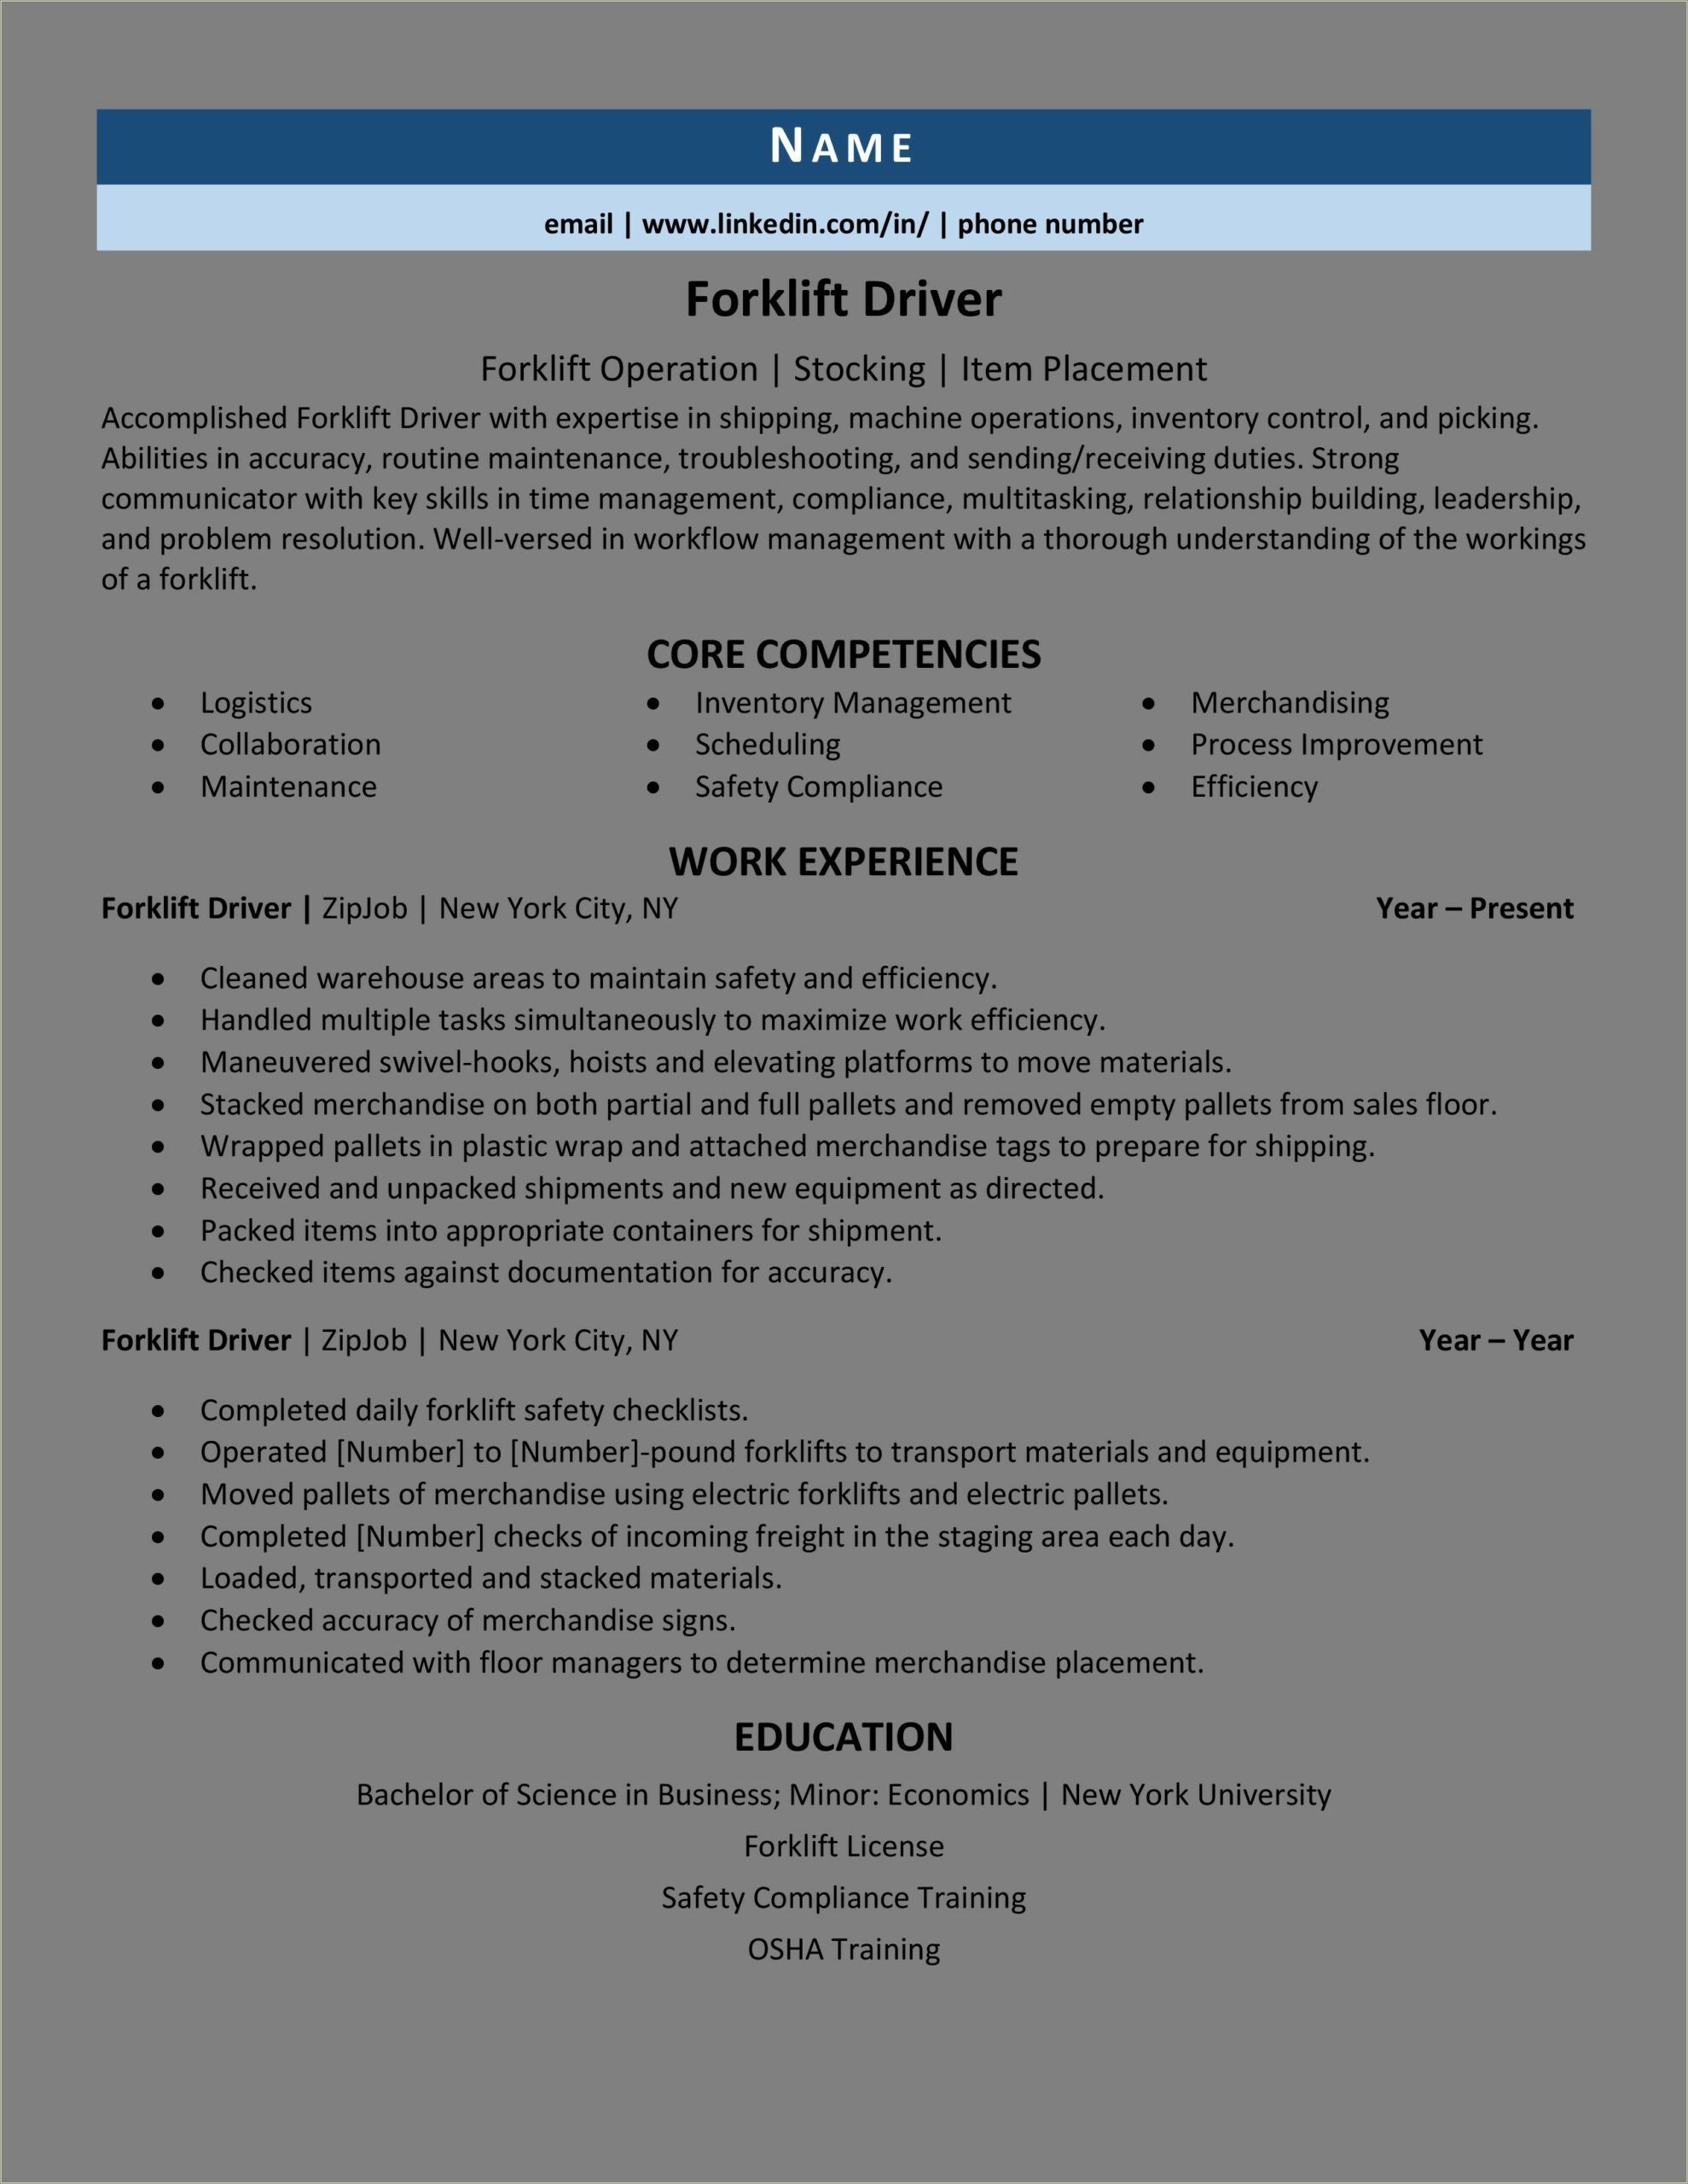 Forklift Operato Warehouse Job Description For Resume